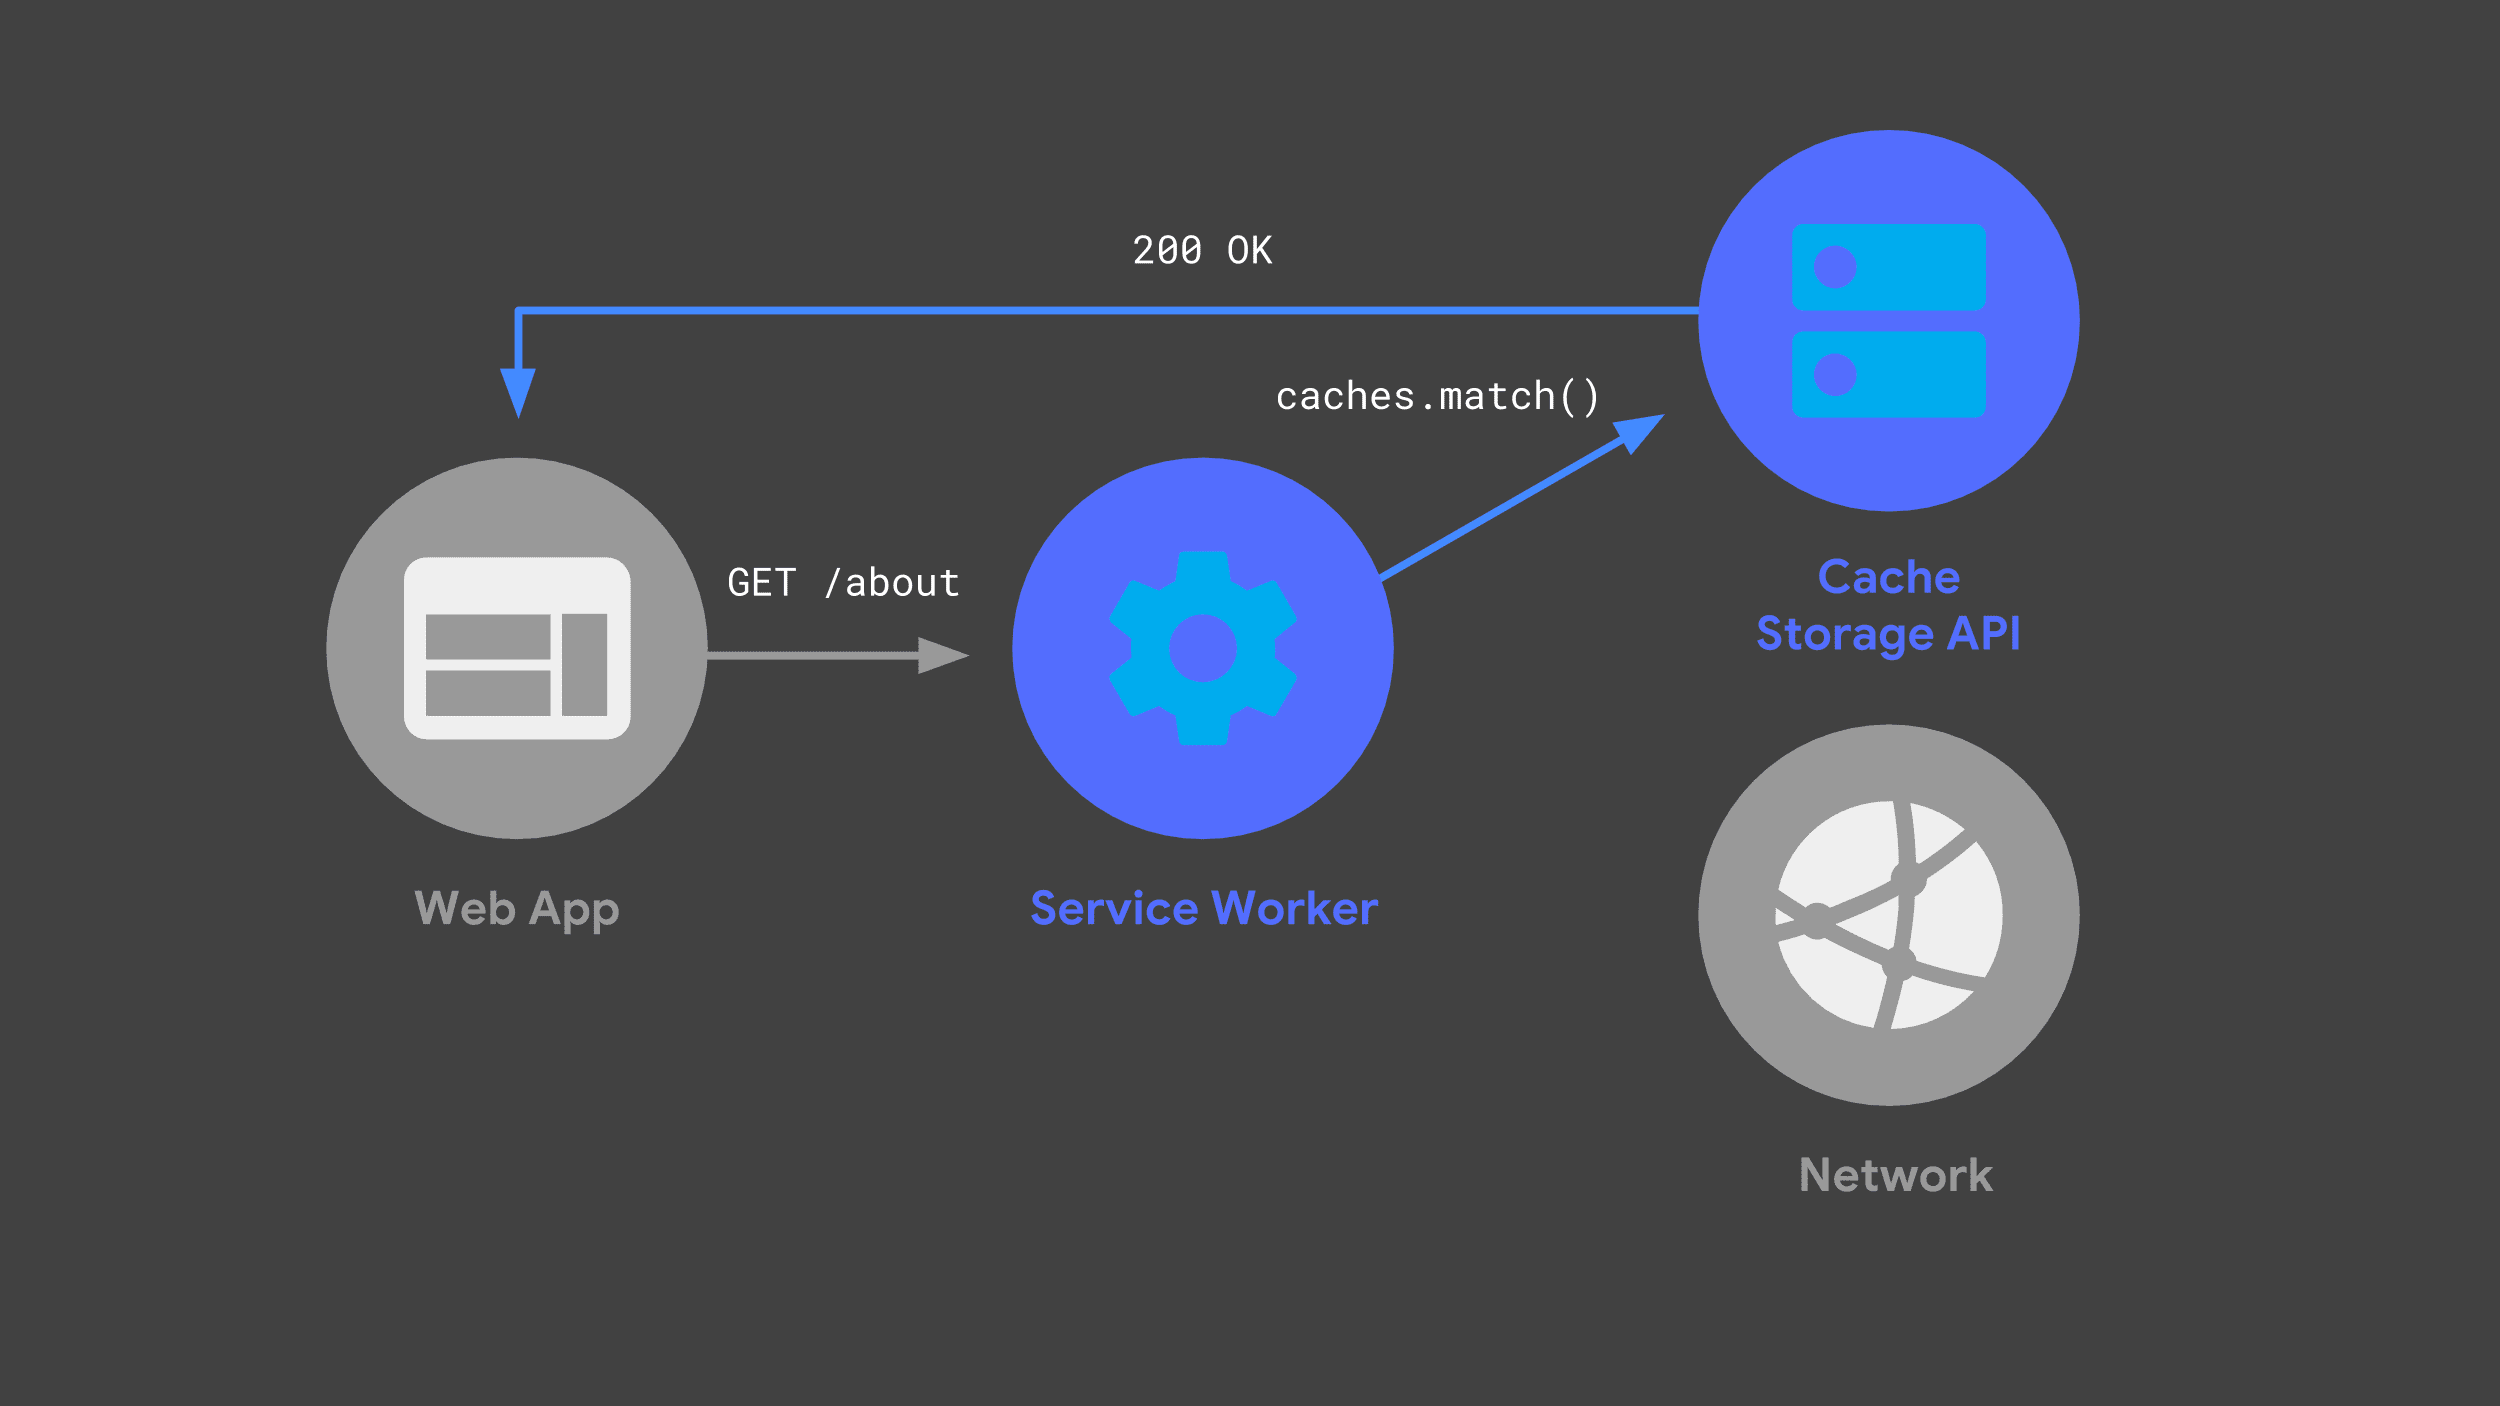 使用 Cache Storage API 來回應 (繞過網路) 的 Service Worker。